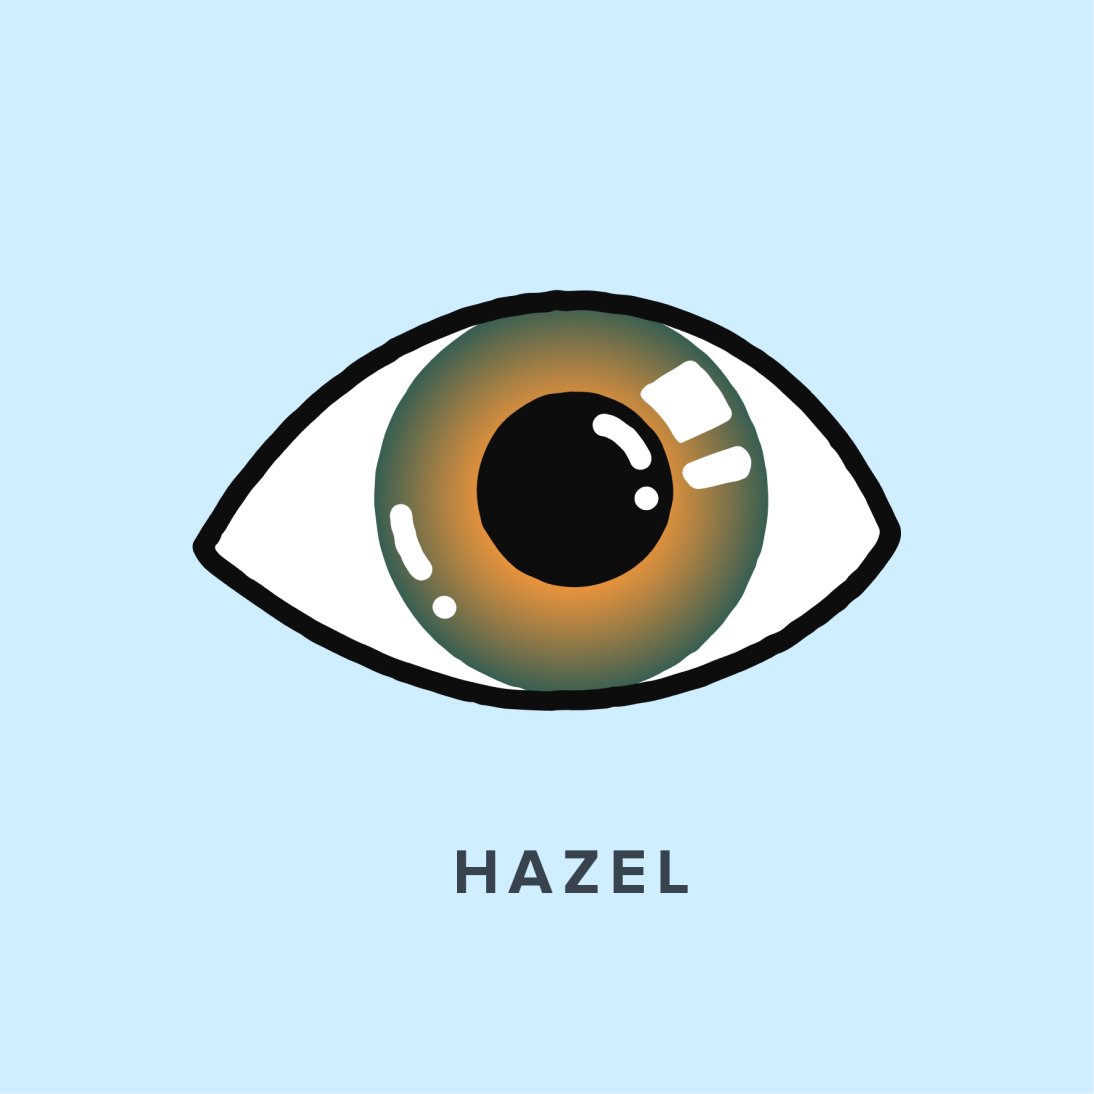 hazel eyes facts